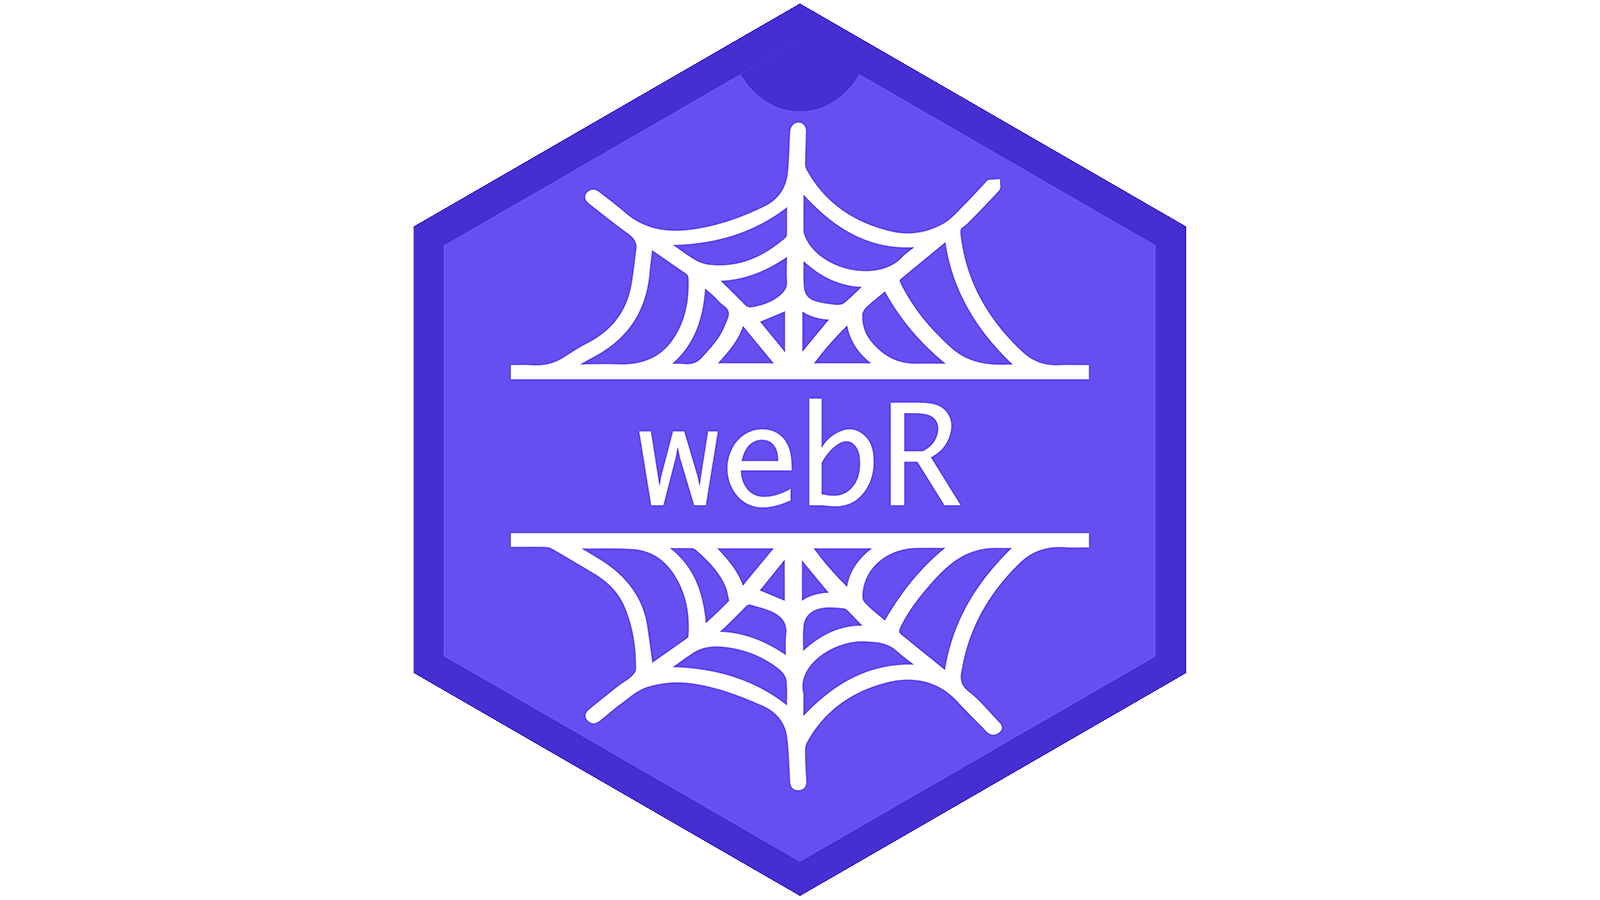 The webR logo.